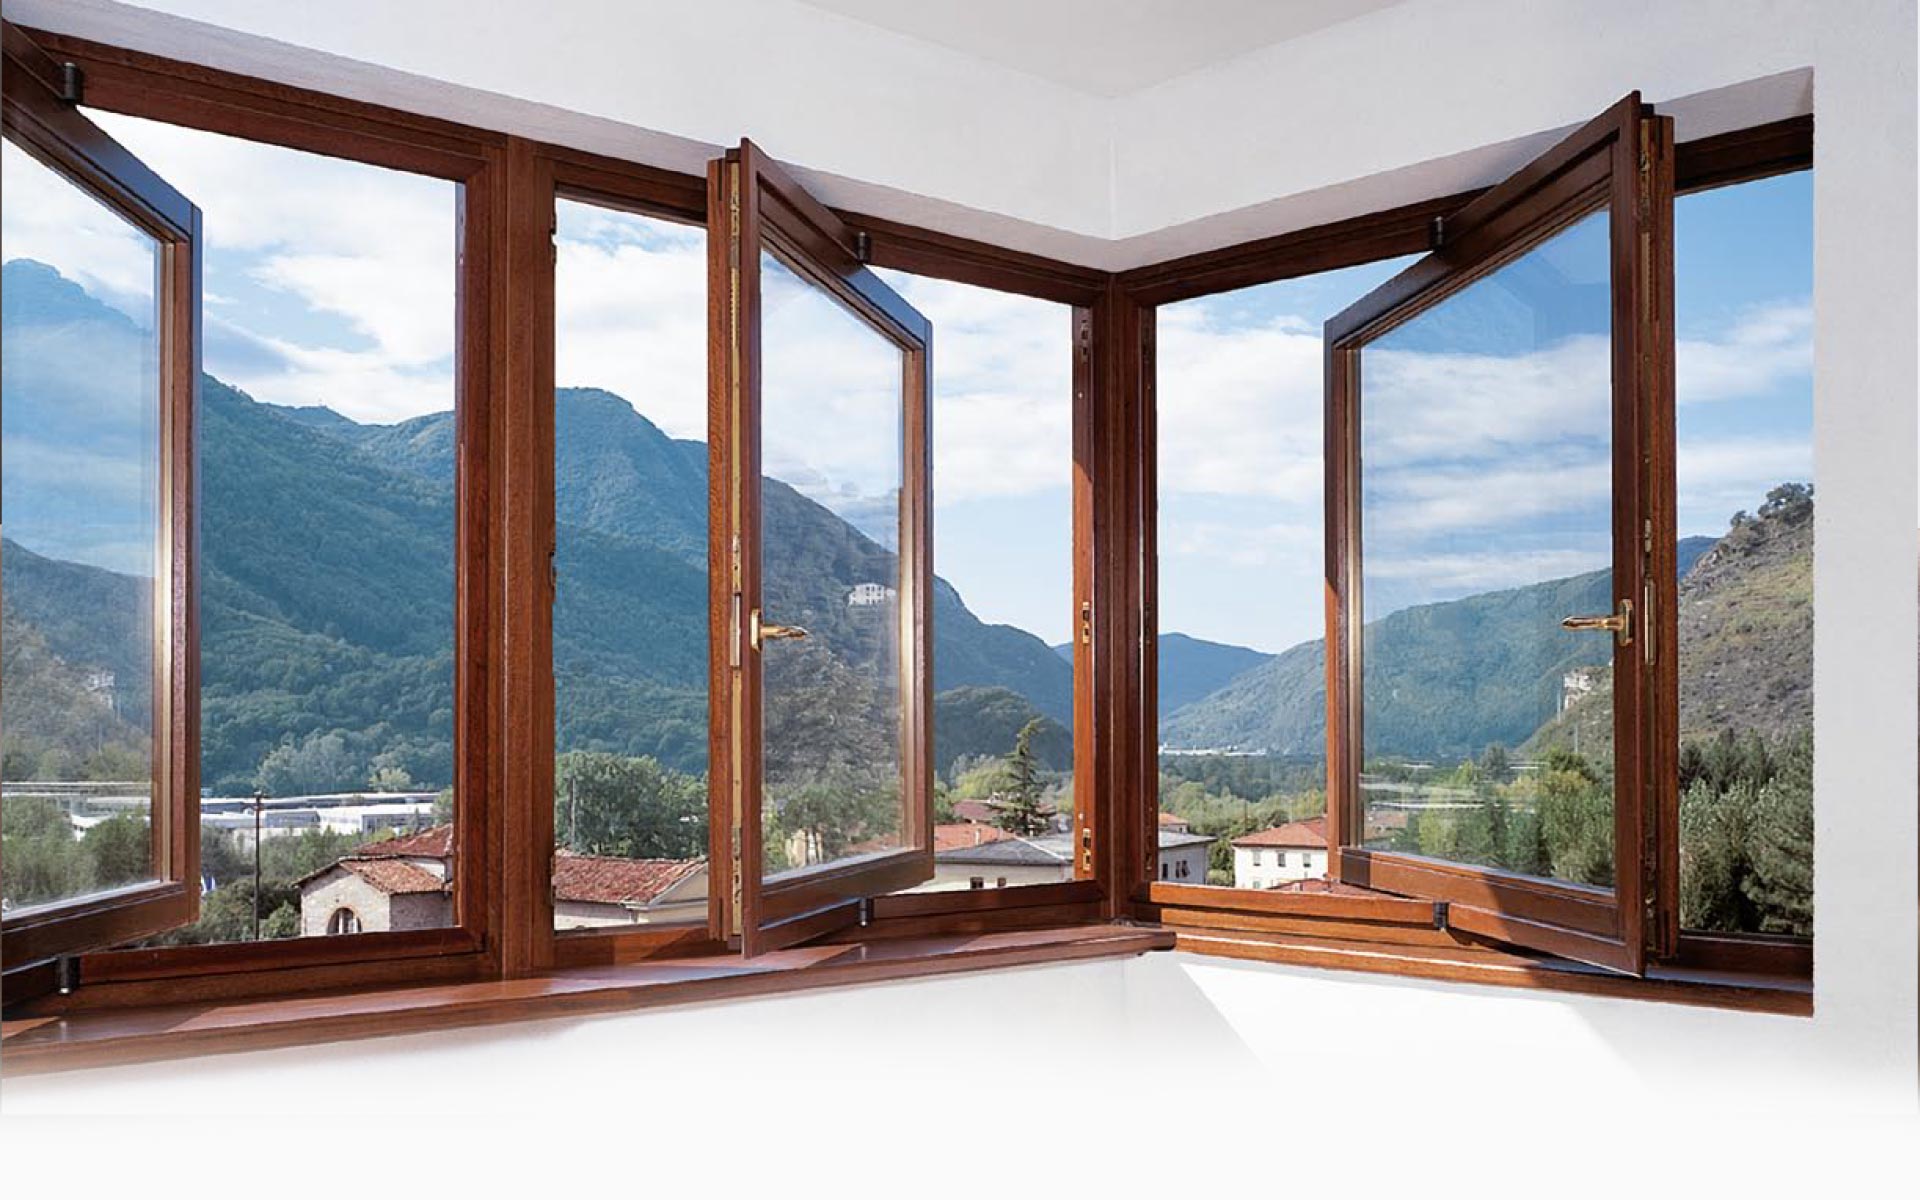 Окна находка. Дерево-алюминиевые окна Unilux. Пластико-деревянные окна. Алюмодеревянные окна. Красивые деревянные окна.